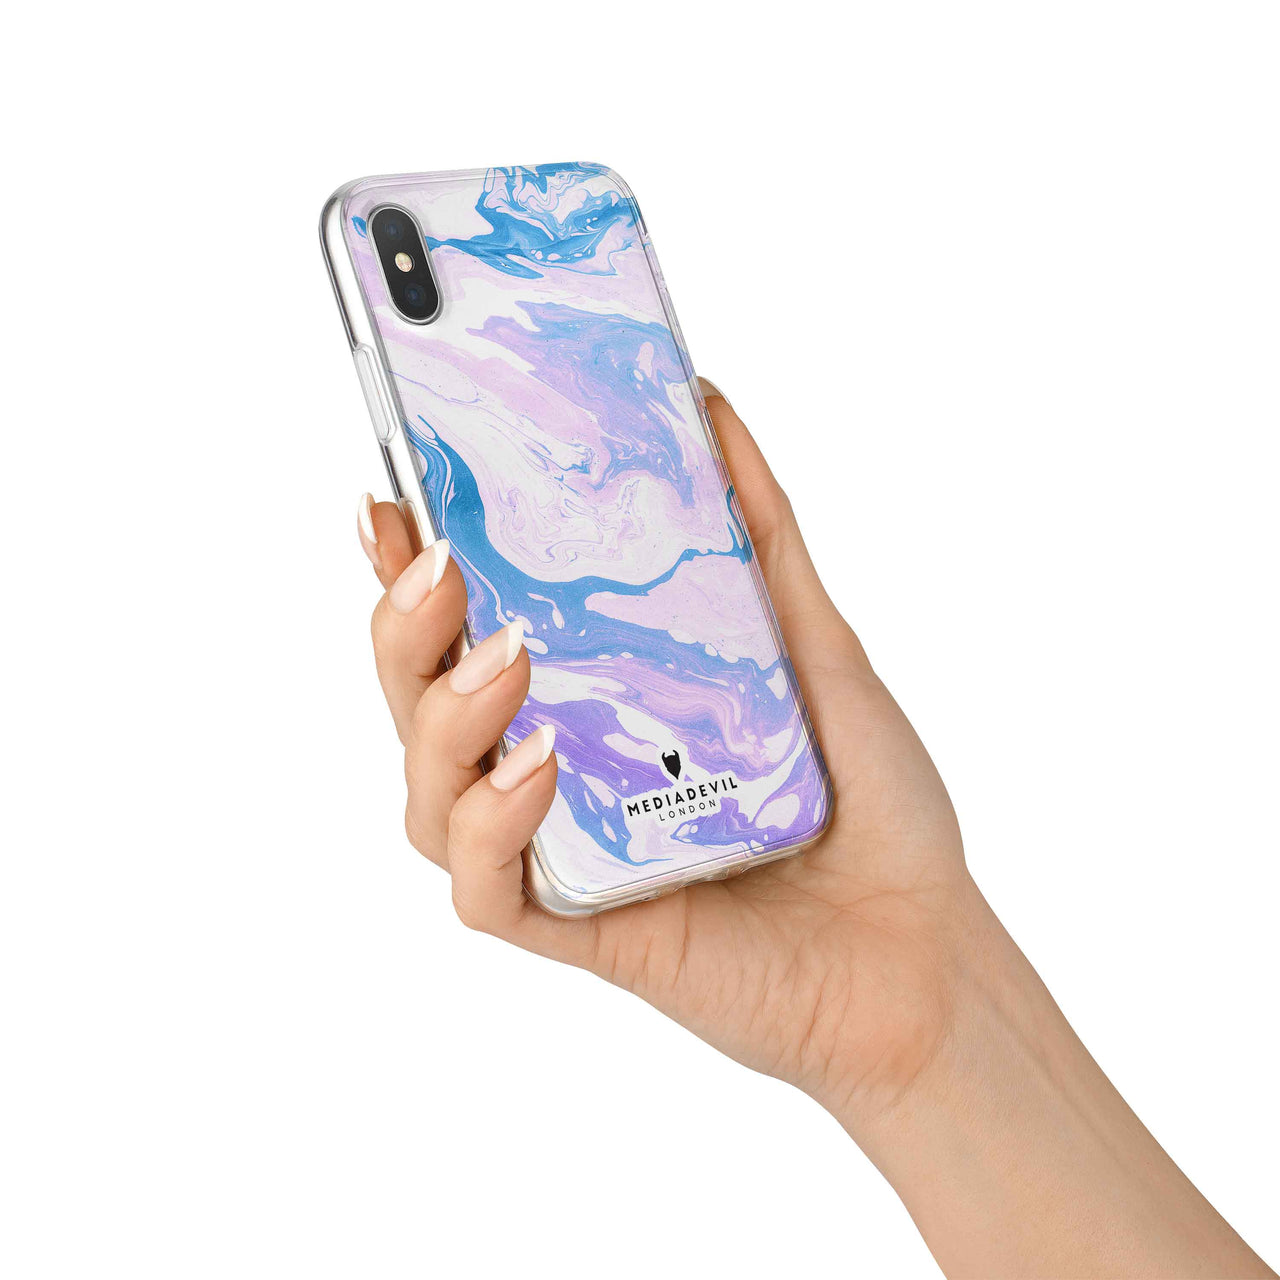 iPhone X / XS Case - Marble Pattern - Reinforced TPU Gel Case